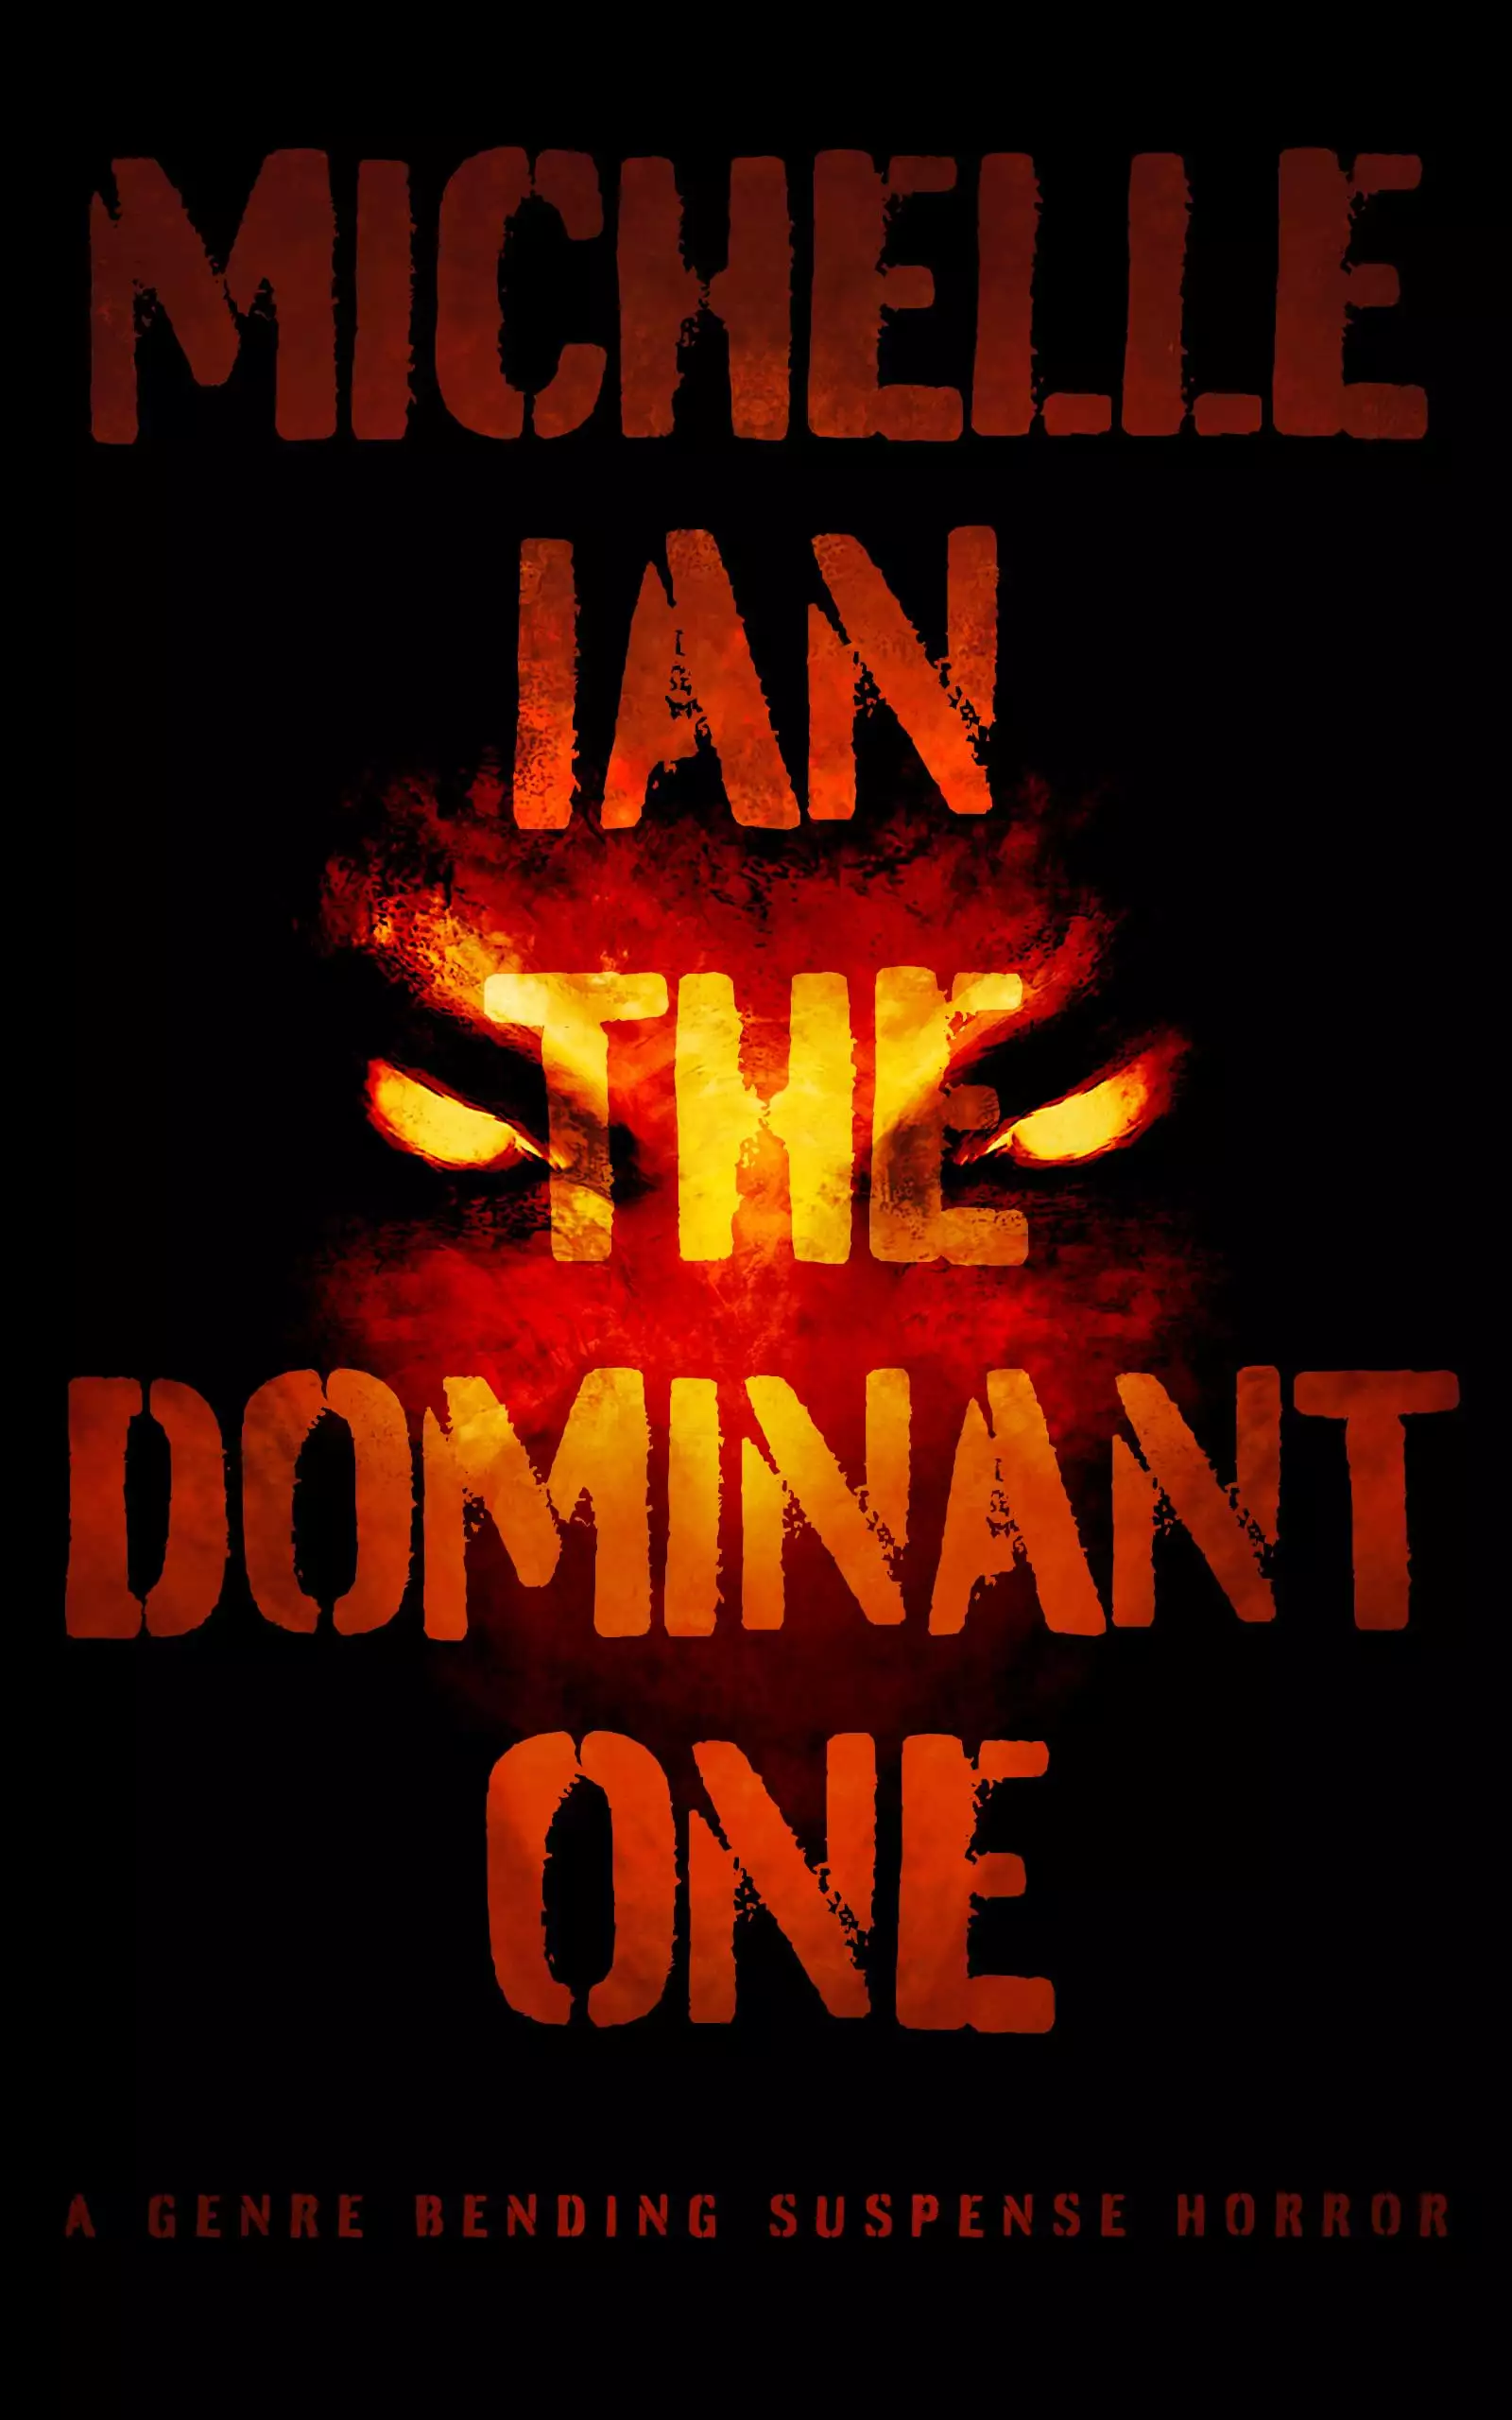 The Dominant One: A Genre Bending Suspense Horror